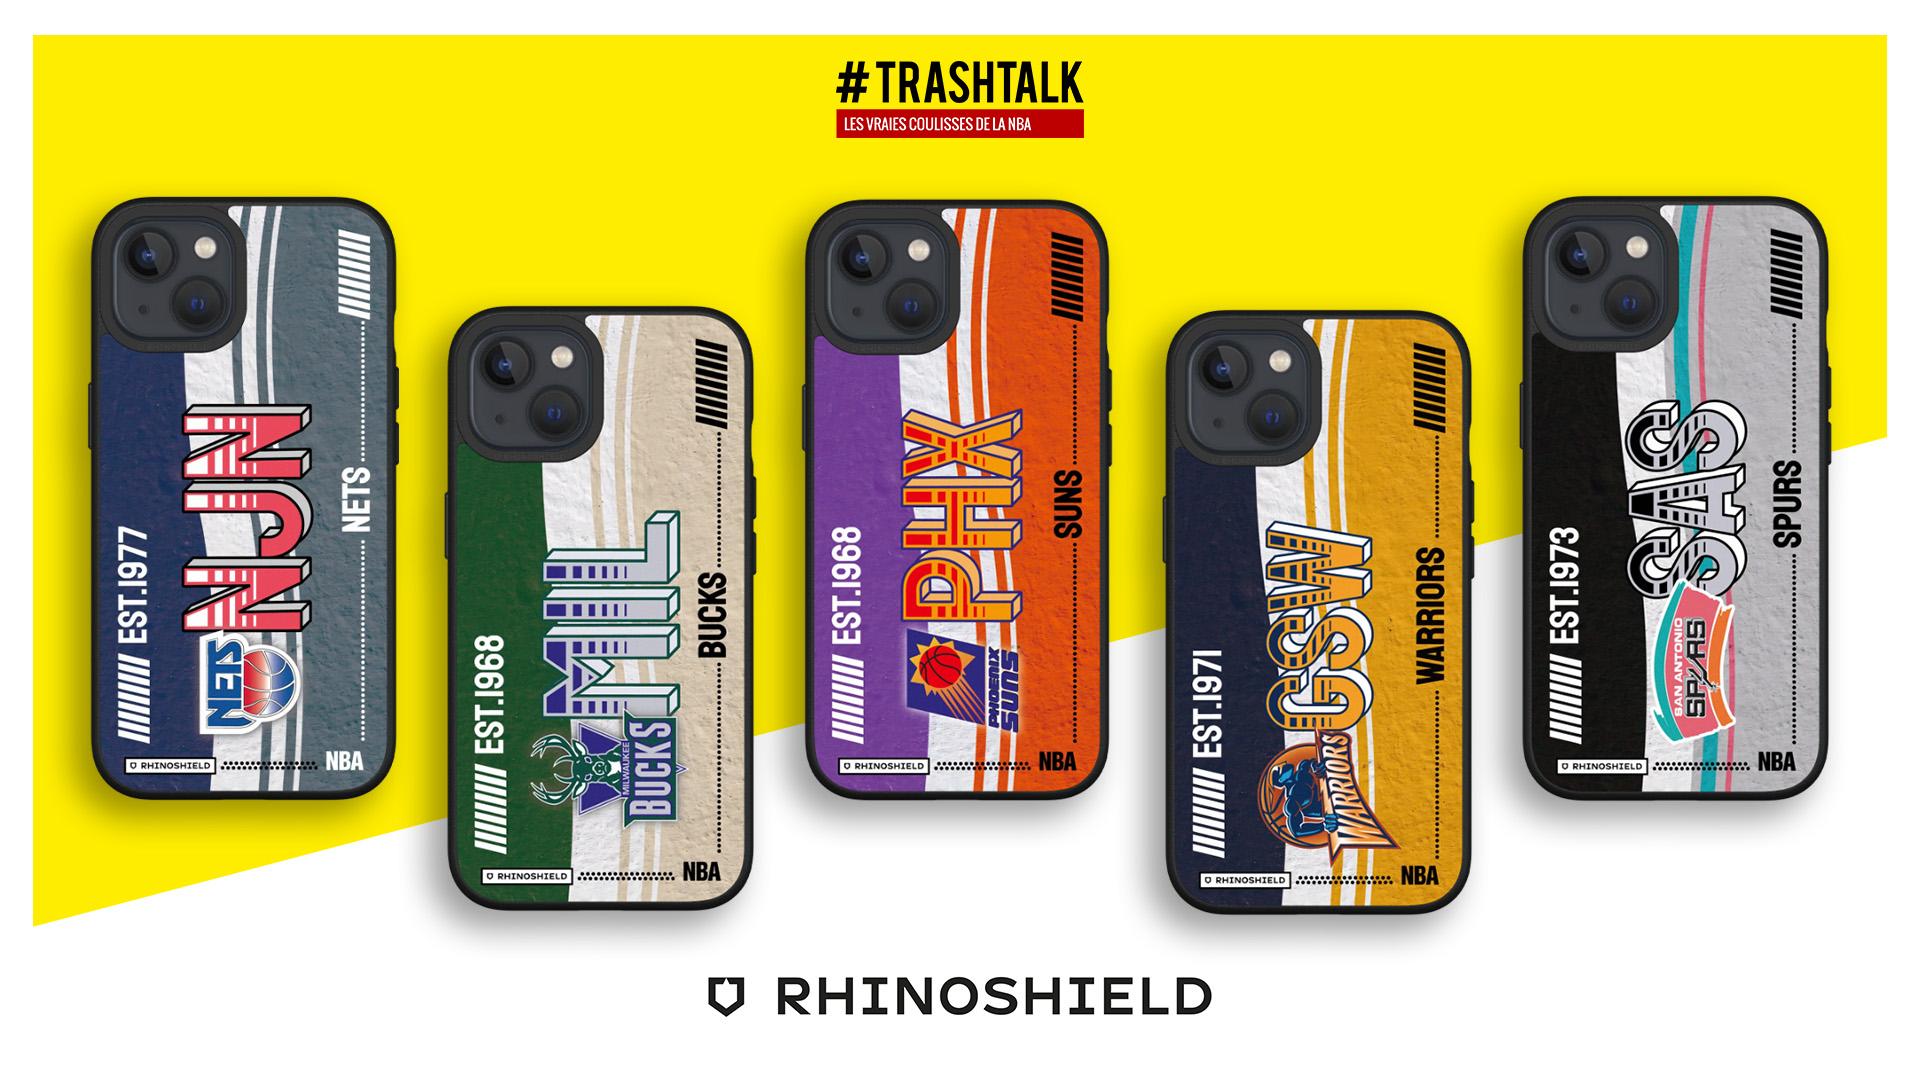 Rhinoshield : sa nouvelle collection d'accessoires mobiles célèbre la NASA